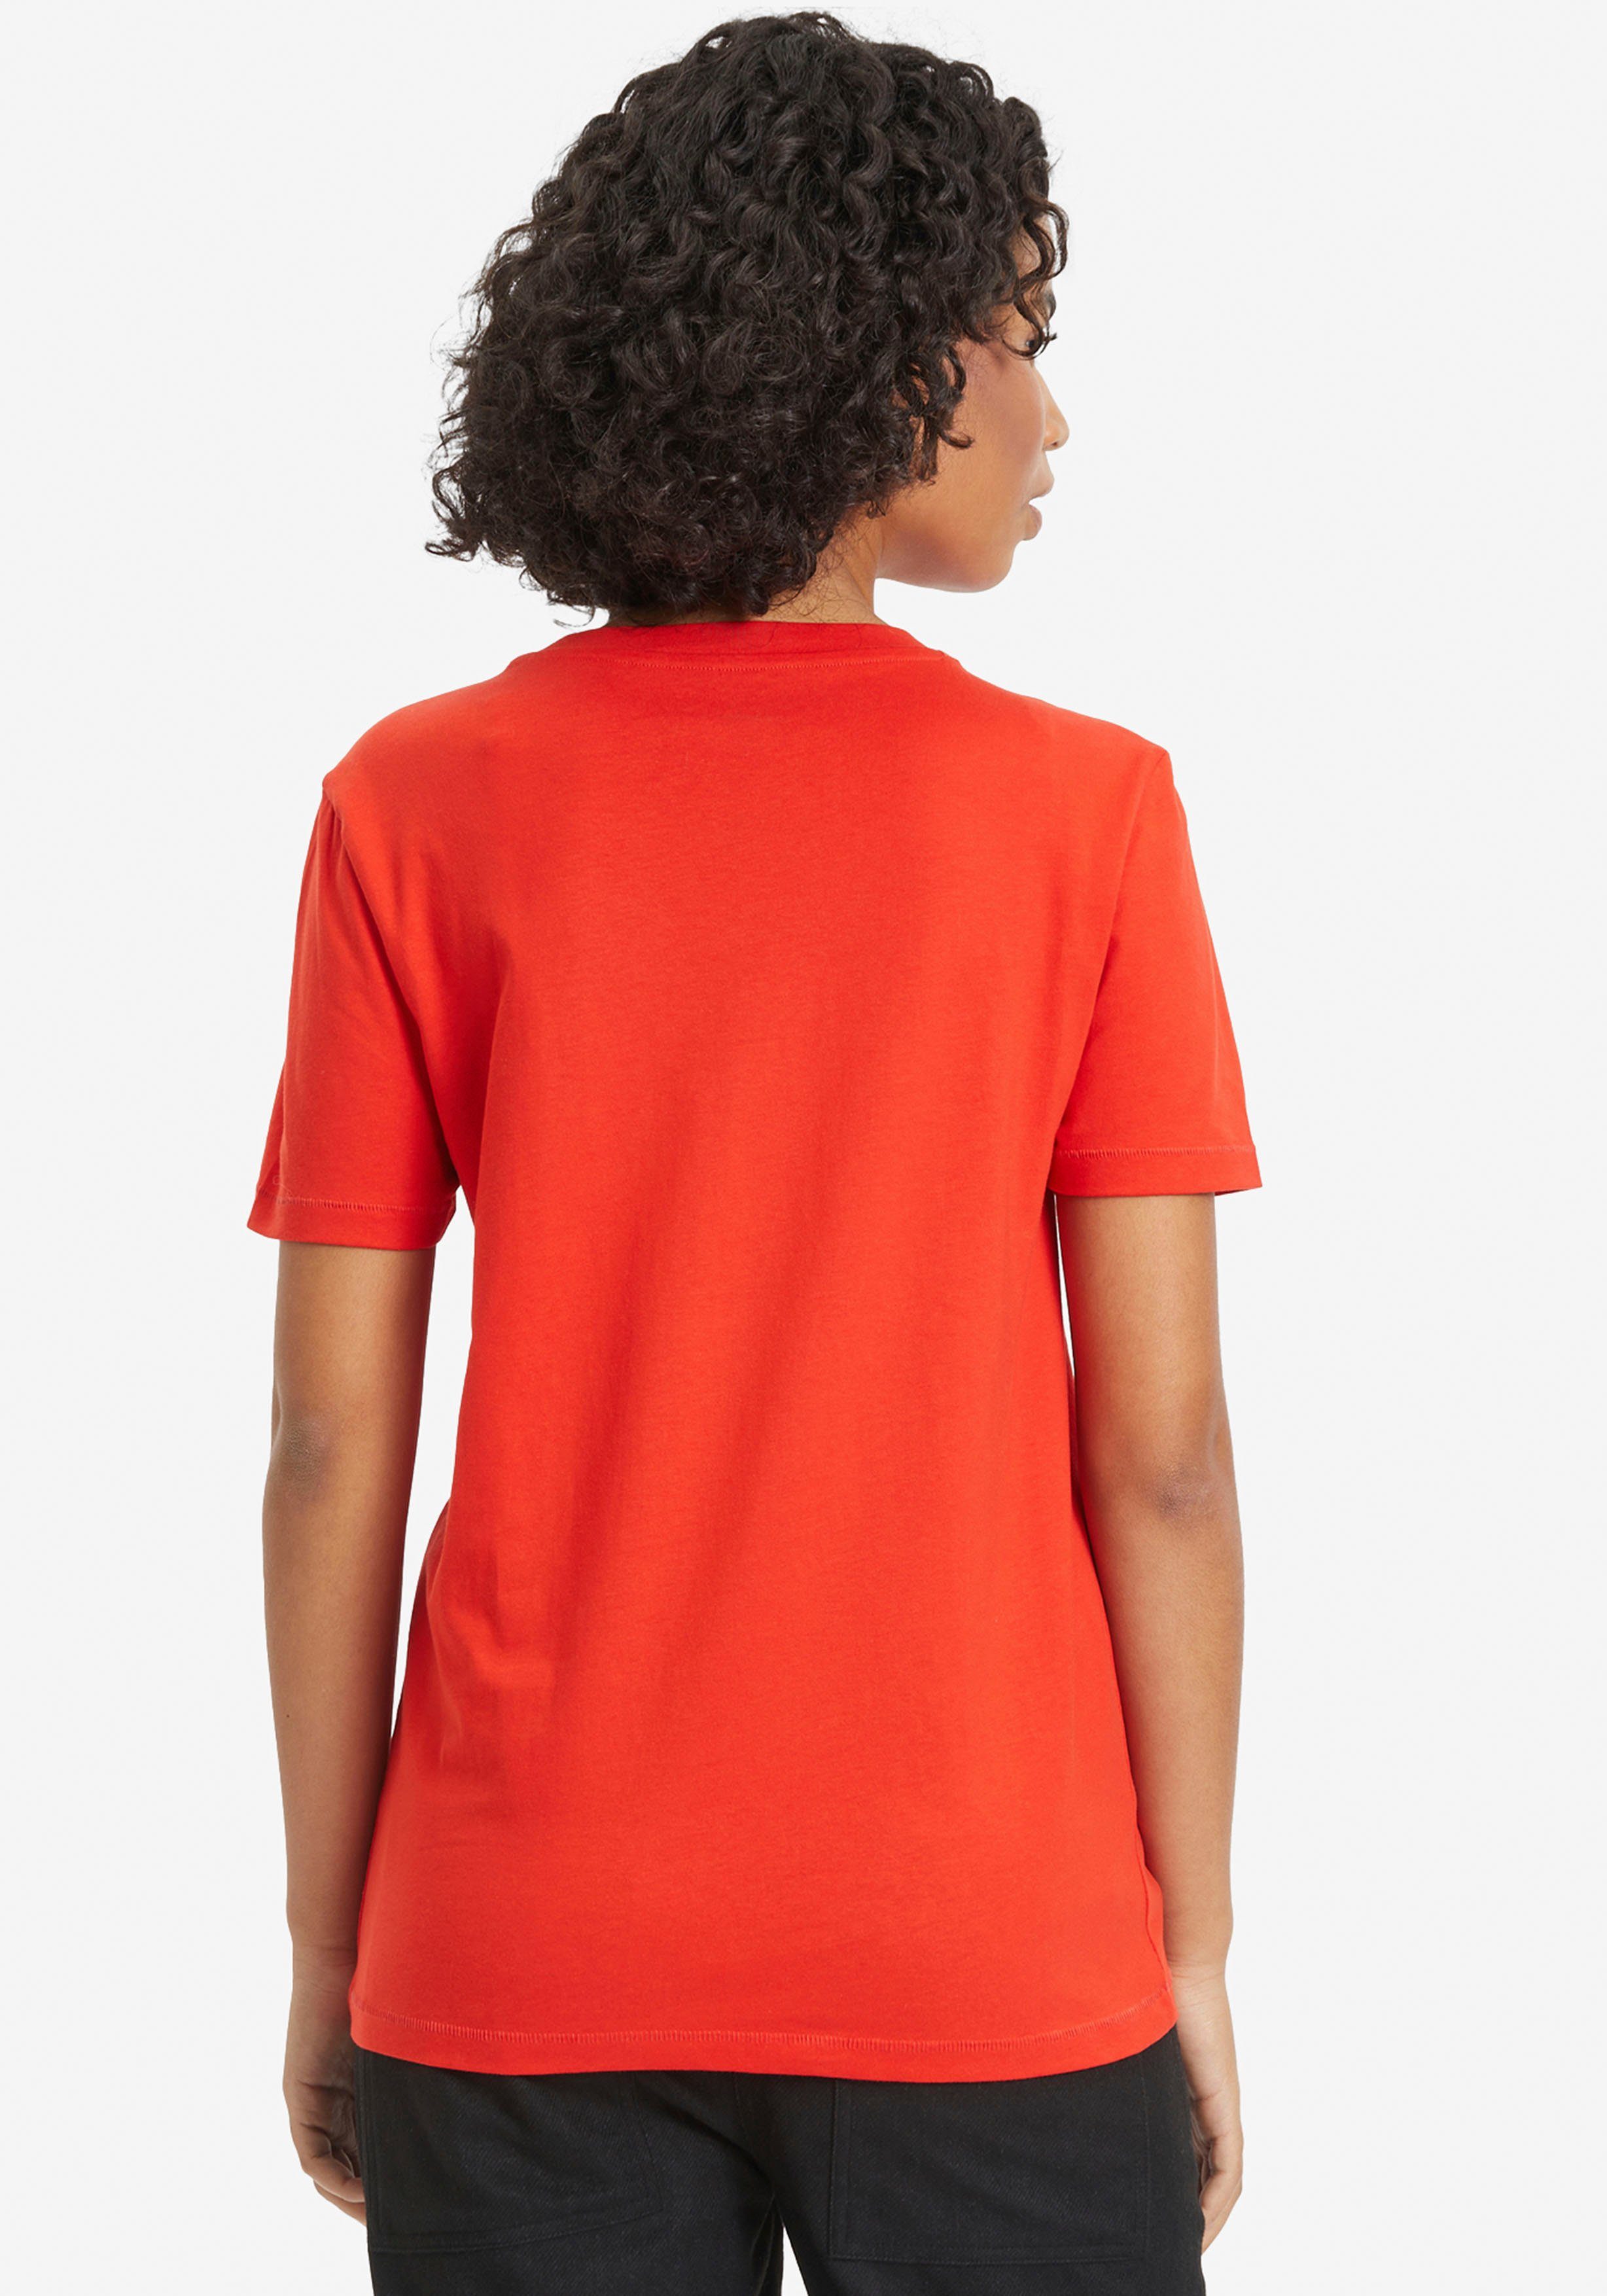 Tamaris NEUE red T-Shirt - KOLLEKTION Rundhalsausschnitt mit fiery